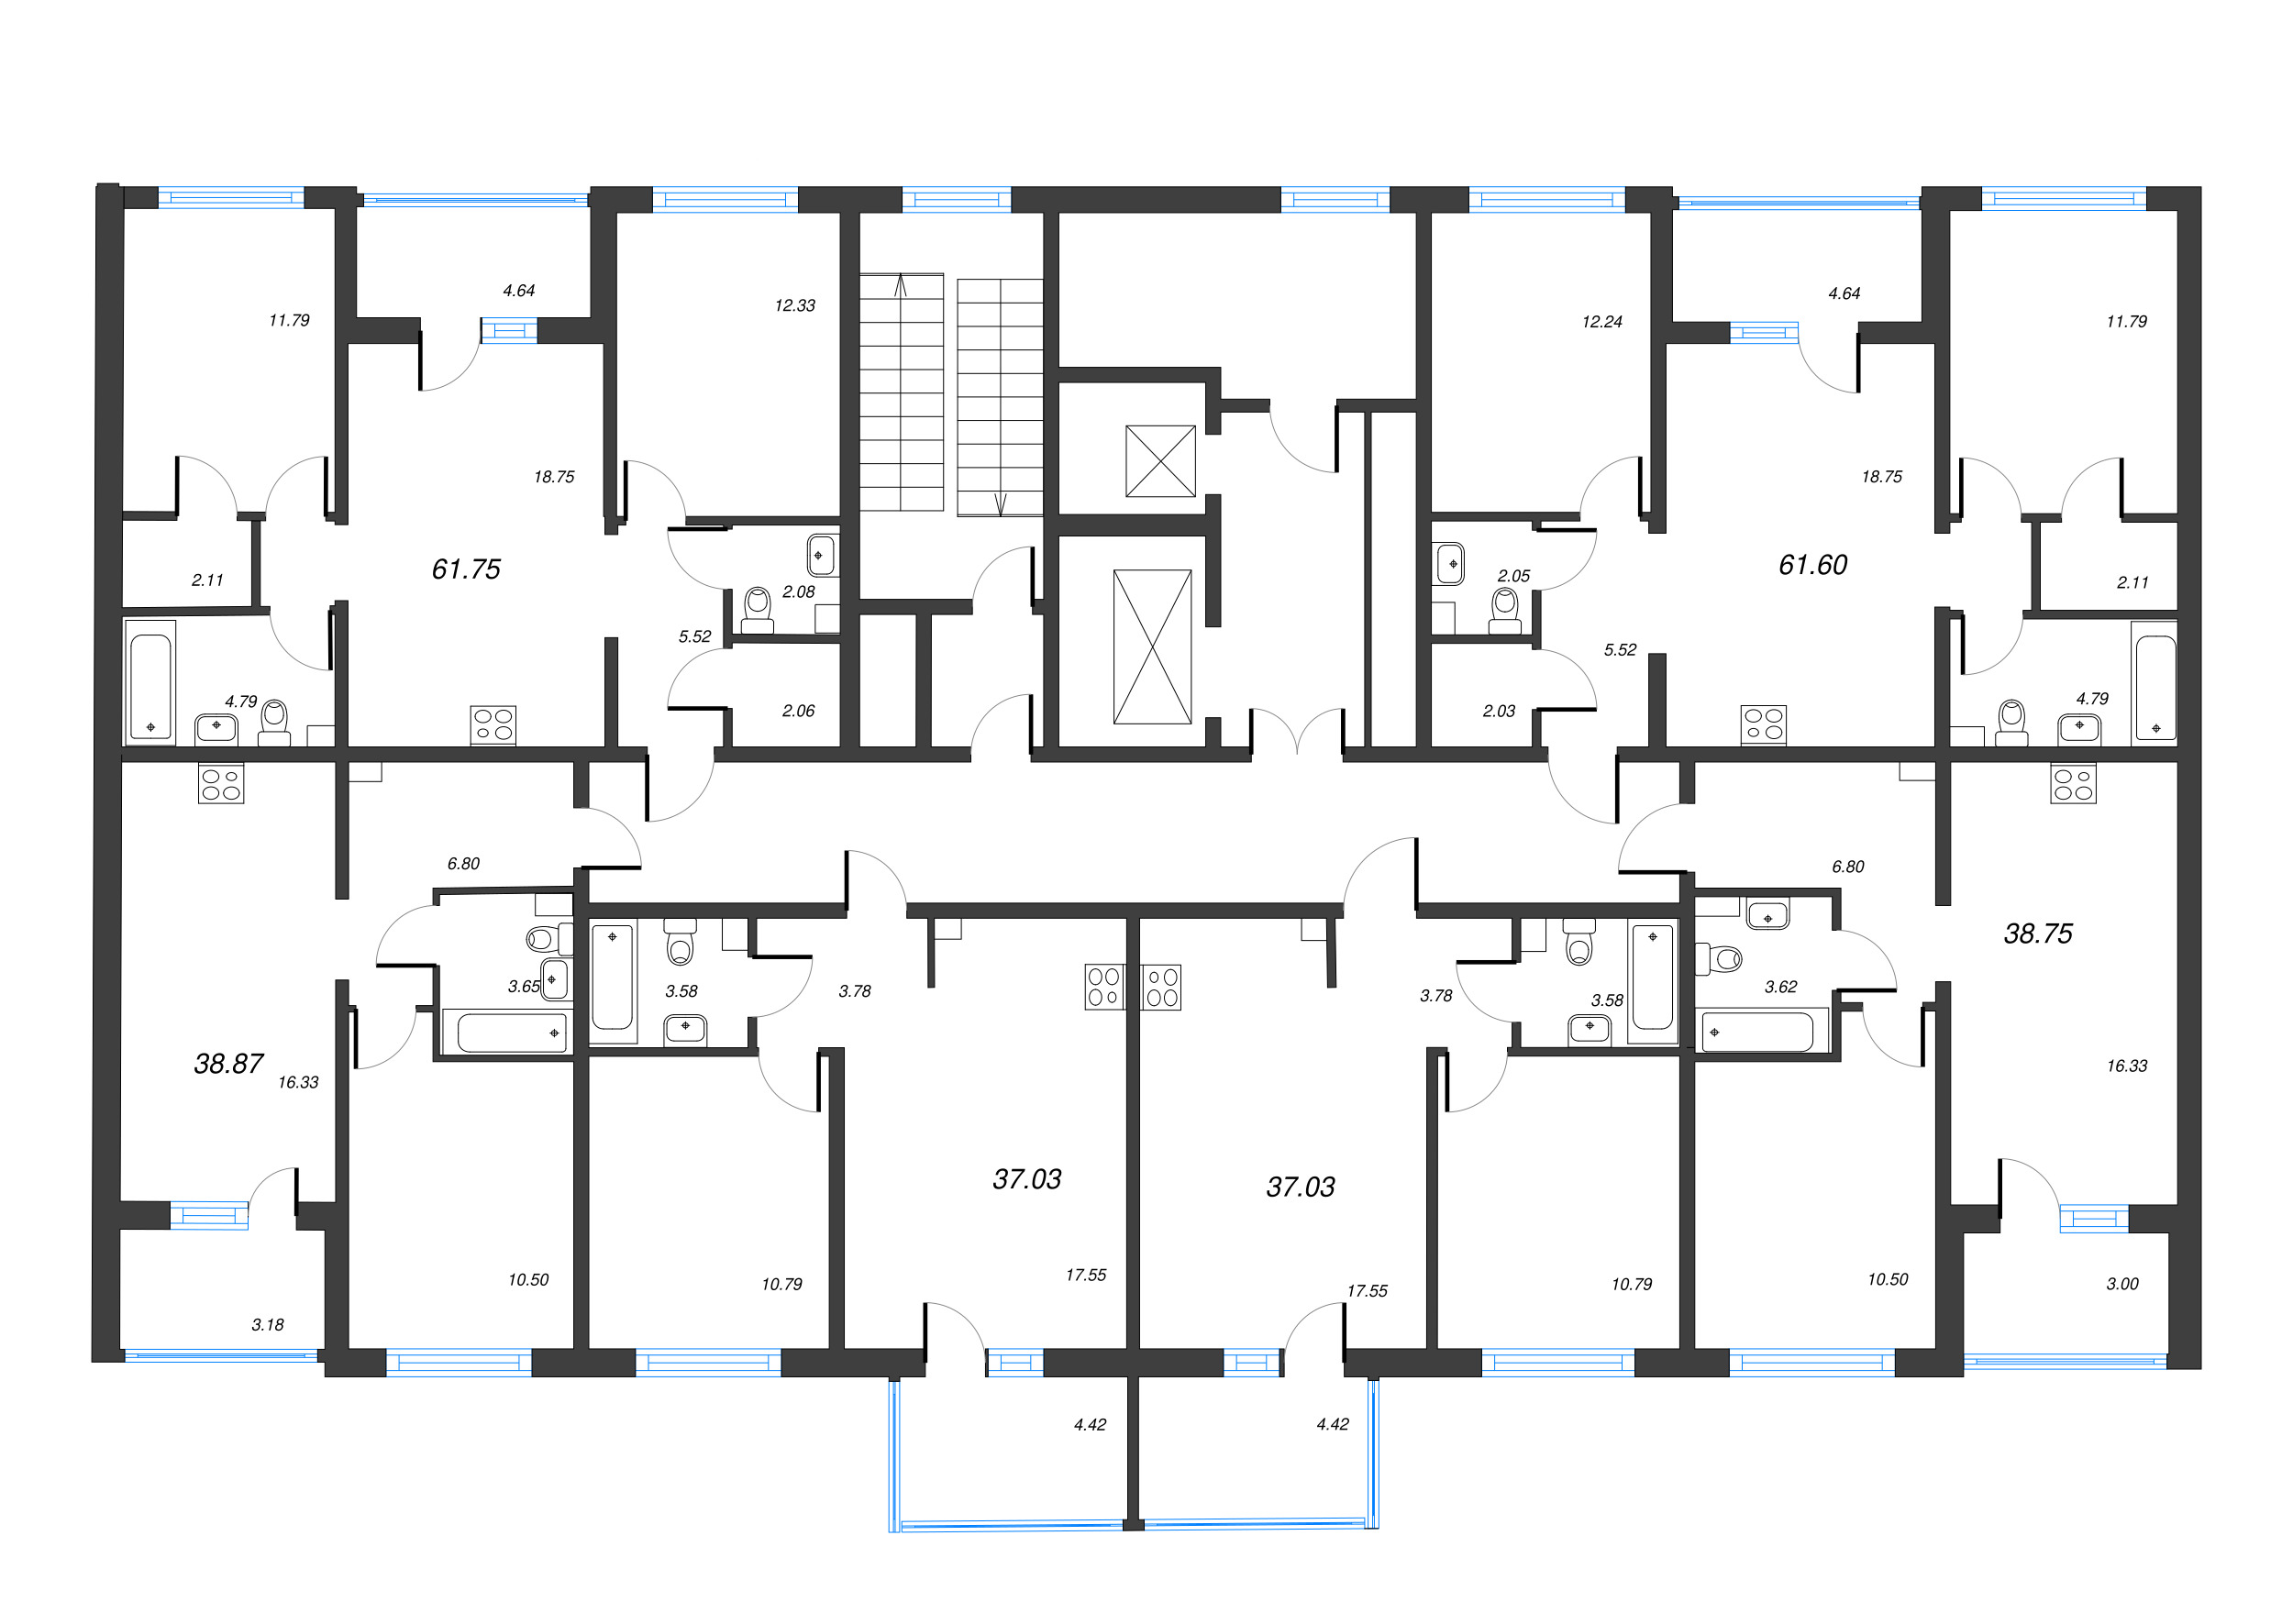 2-комнатная (Евро) квартира, 37.03 м² в ЖК "ЛесArt" - планировка этажа